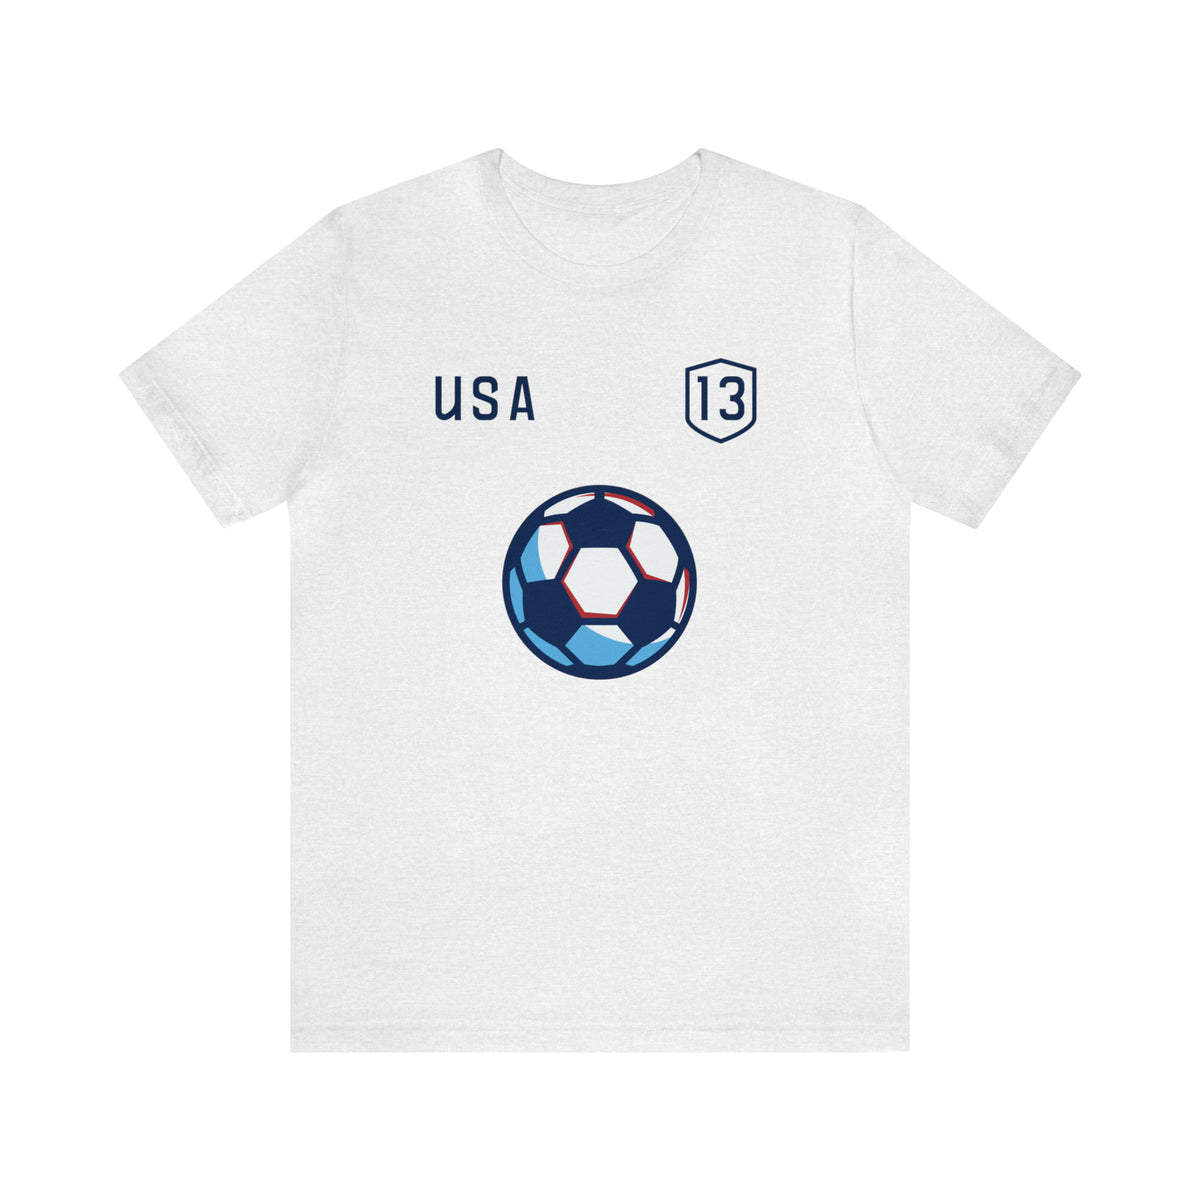 Retro USA Morgan Adult T-Shirt